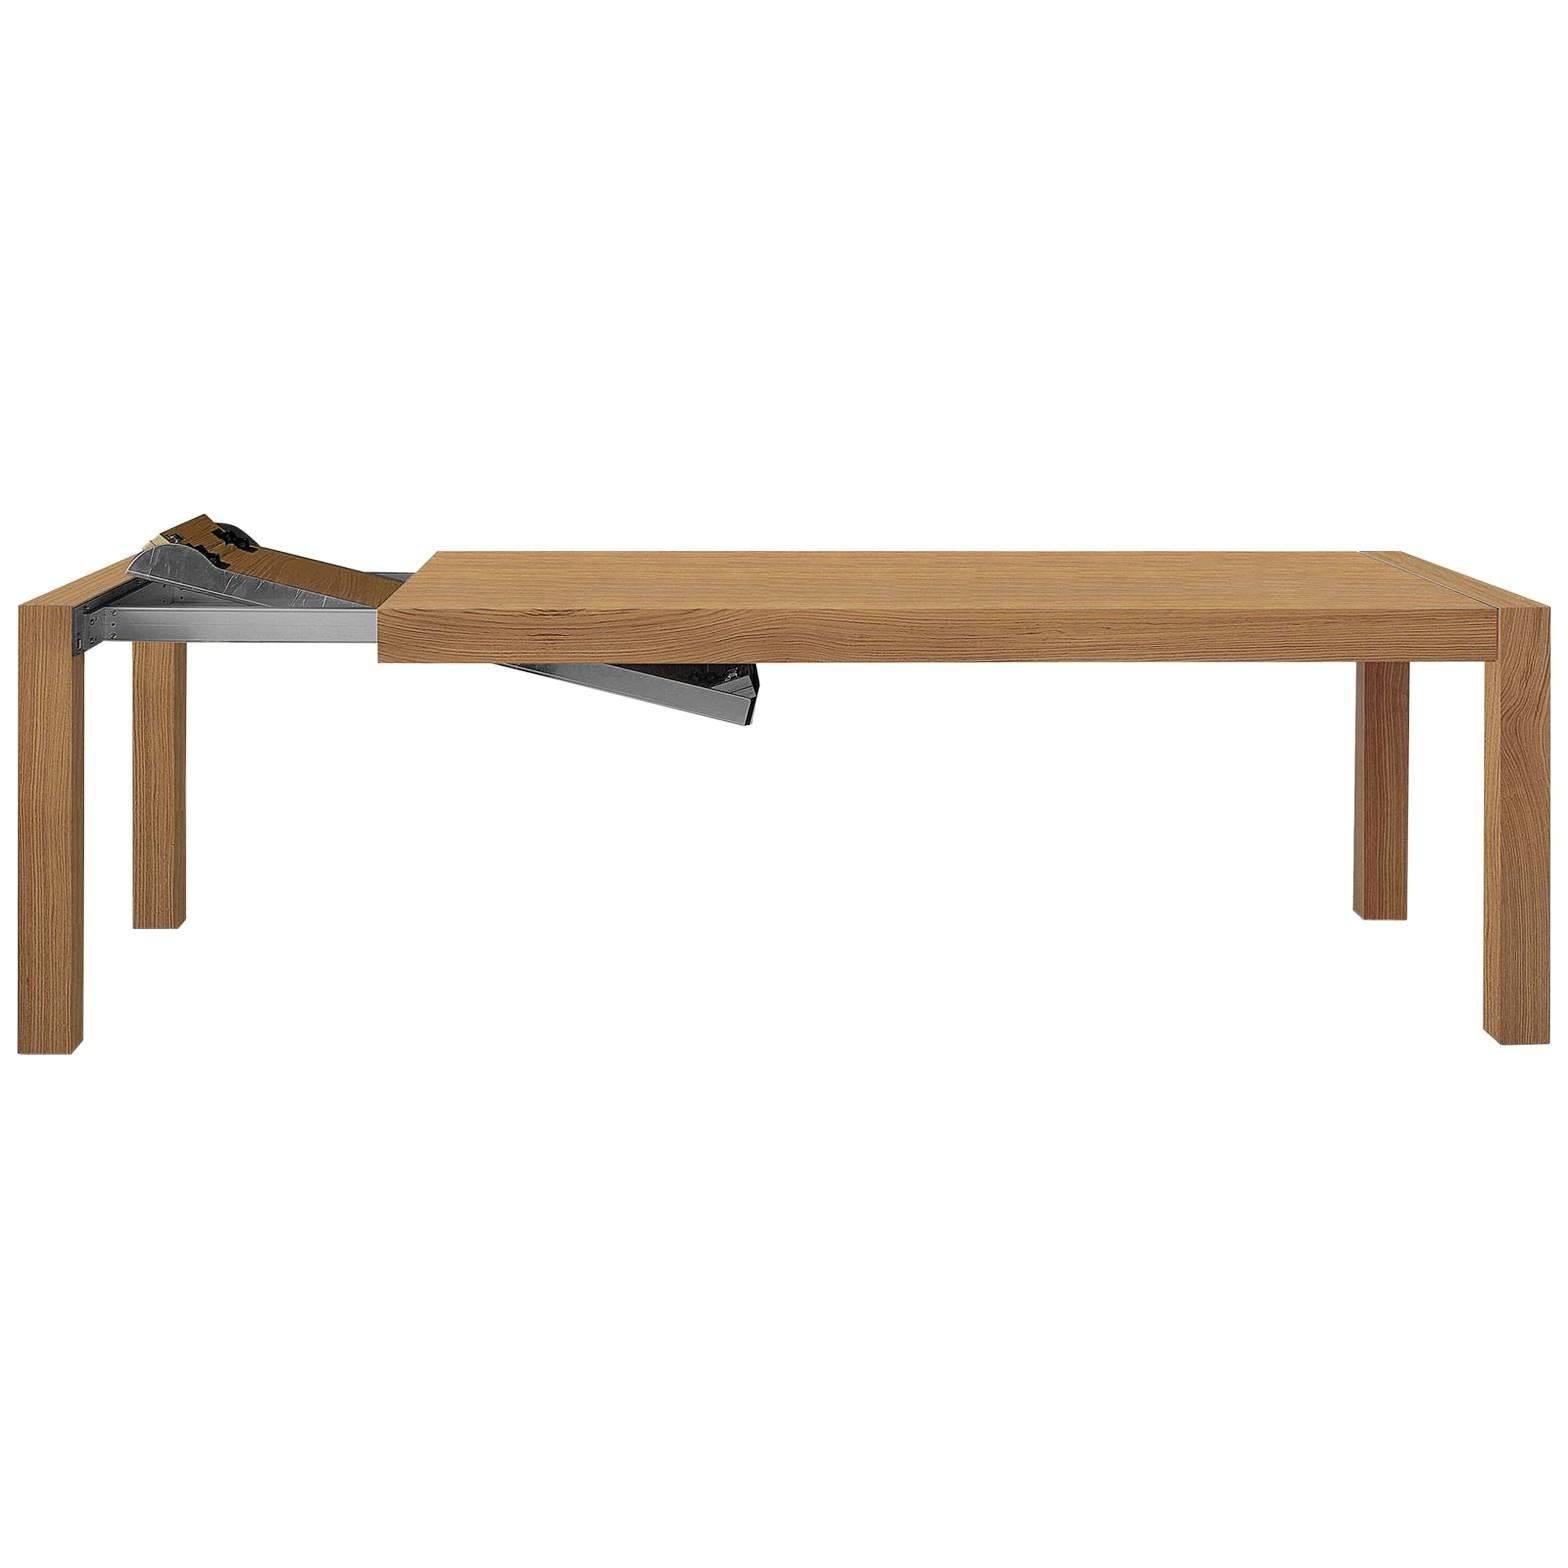 "Kwaak ++" Wooden Extendable Rectangular Table by Stephane Lebrun for Dessie' For Sale